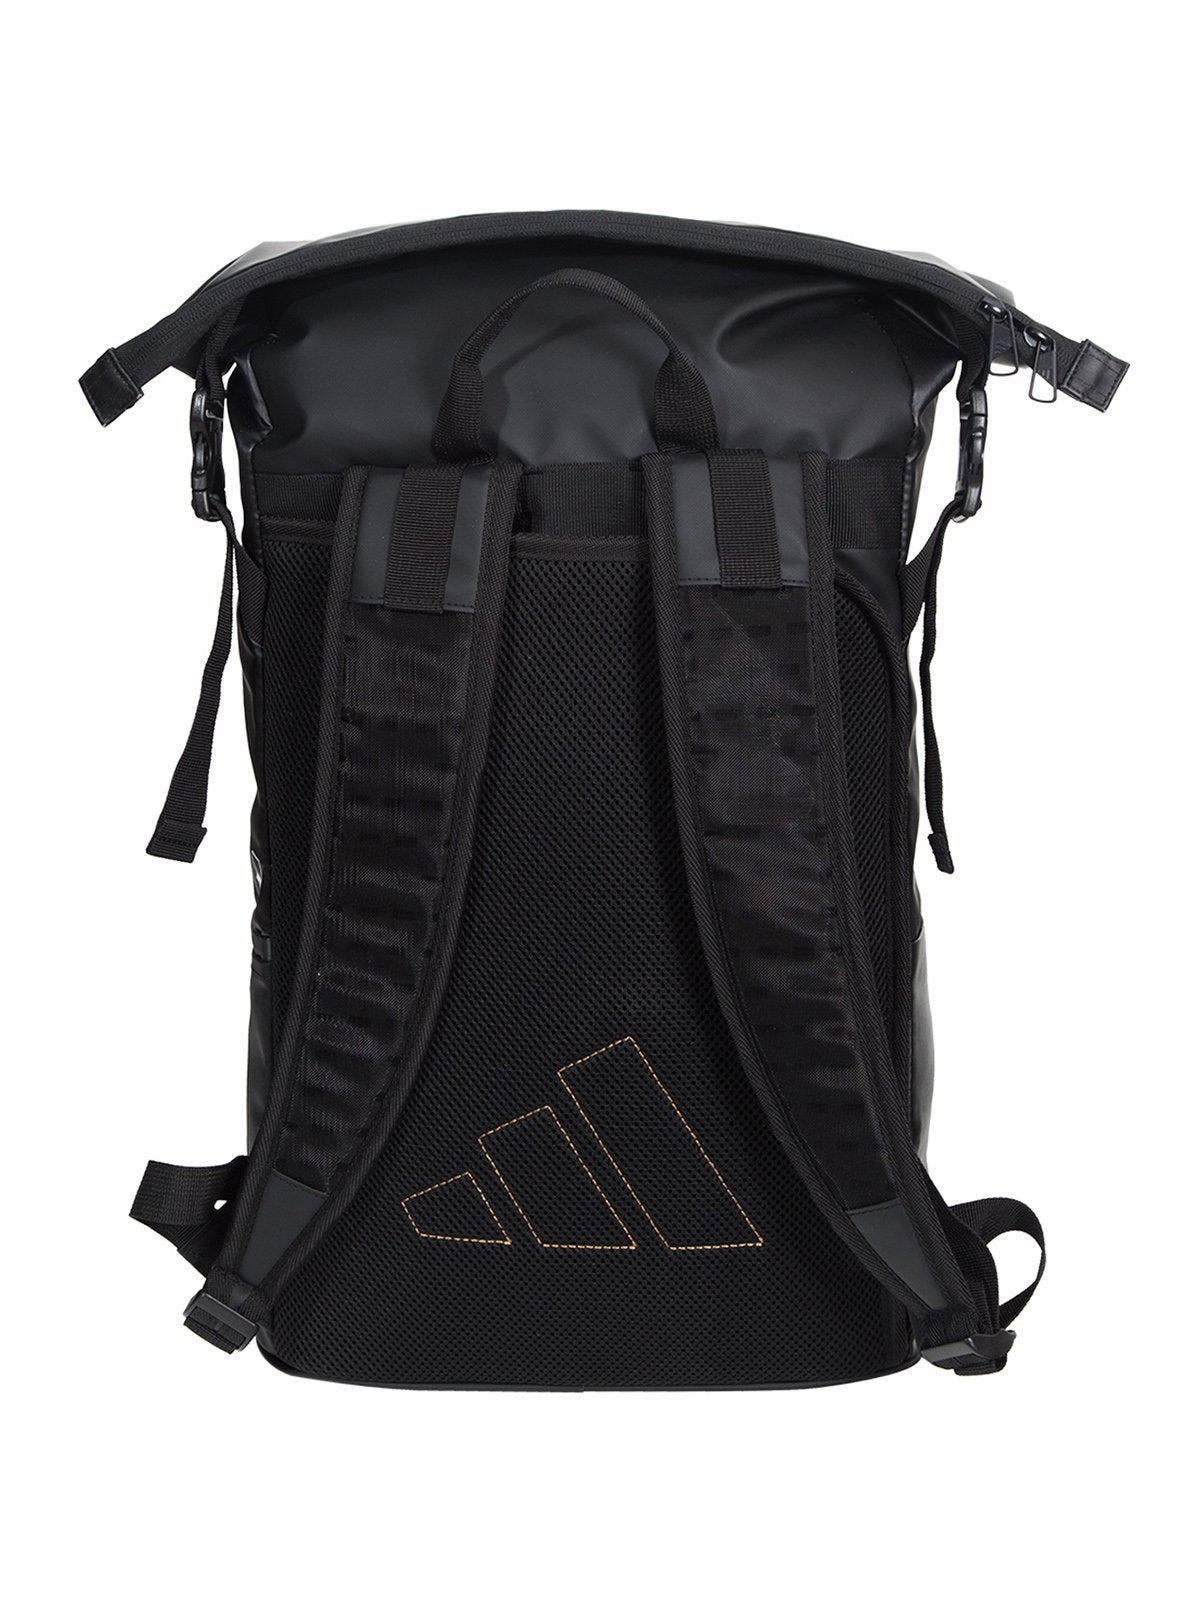 Borse per attrezzatura Unisex Adidas - Multigame 3.2 Backpack - Nero